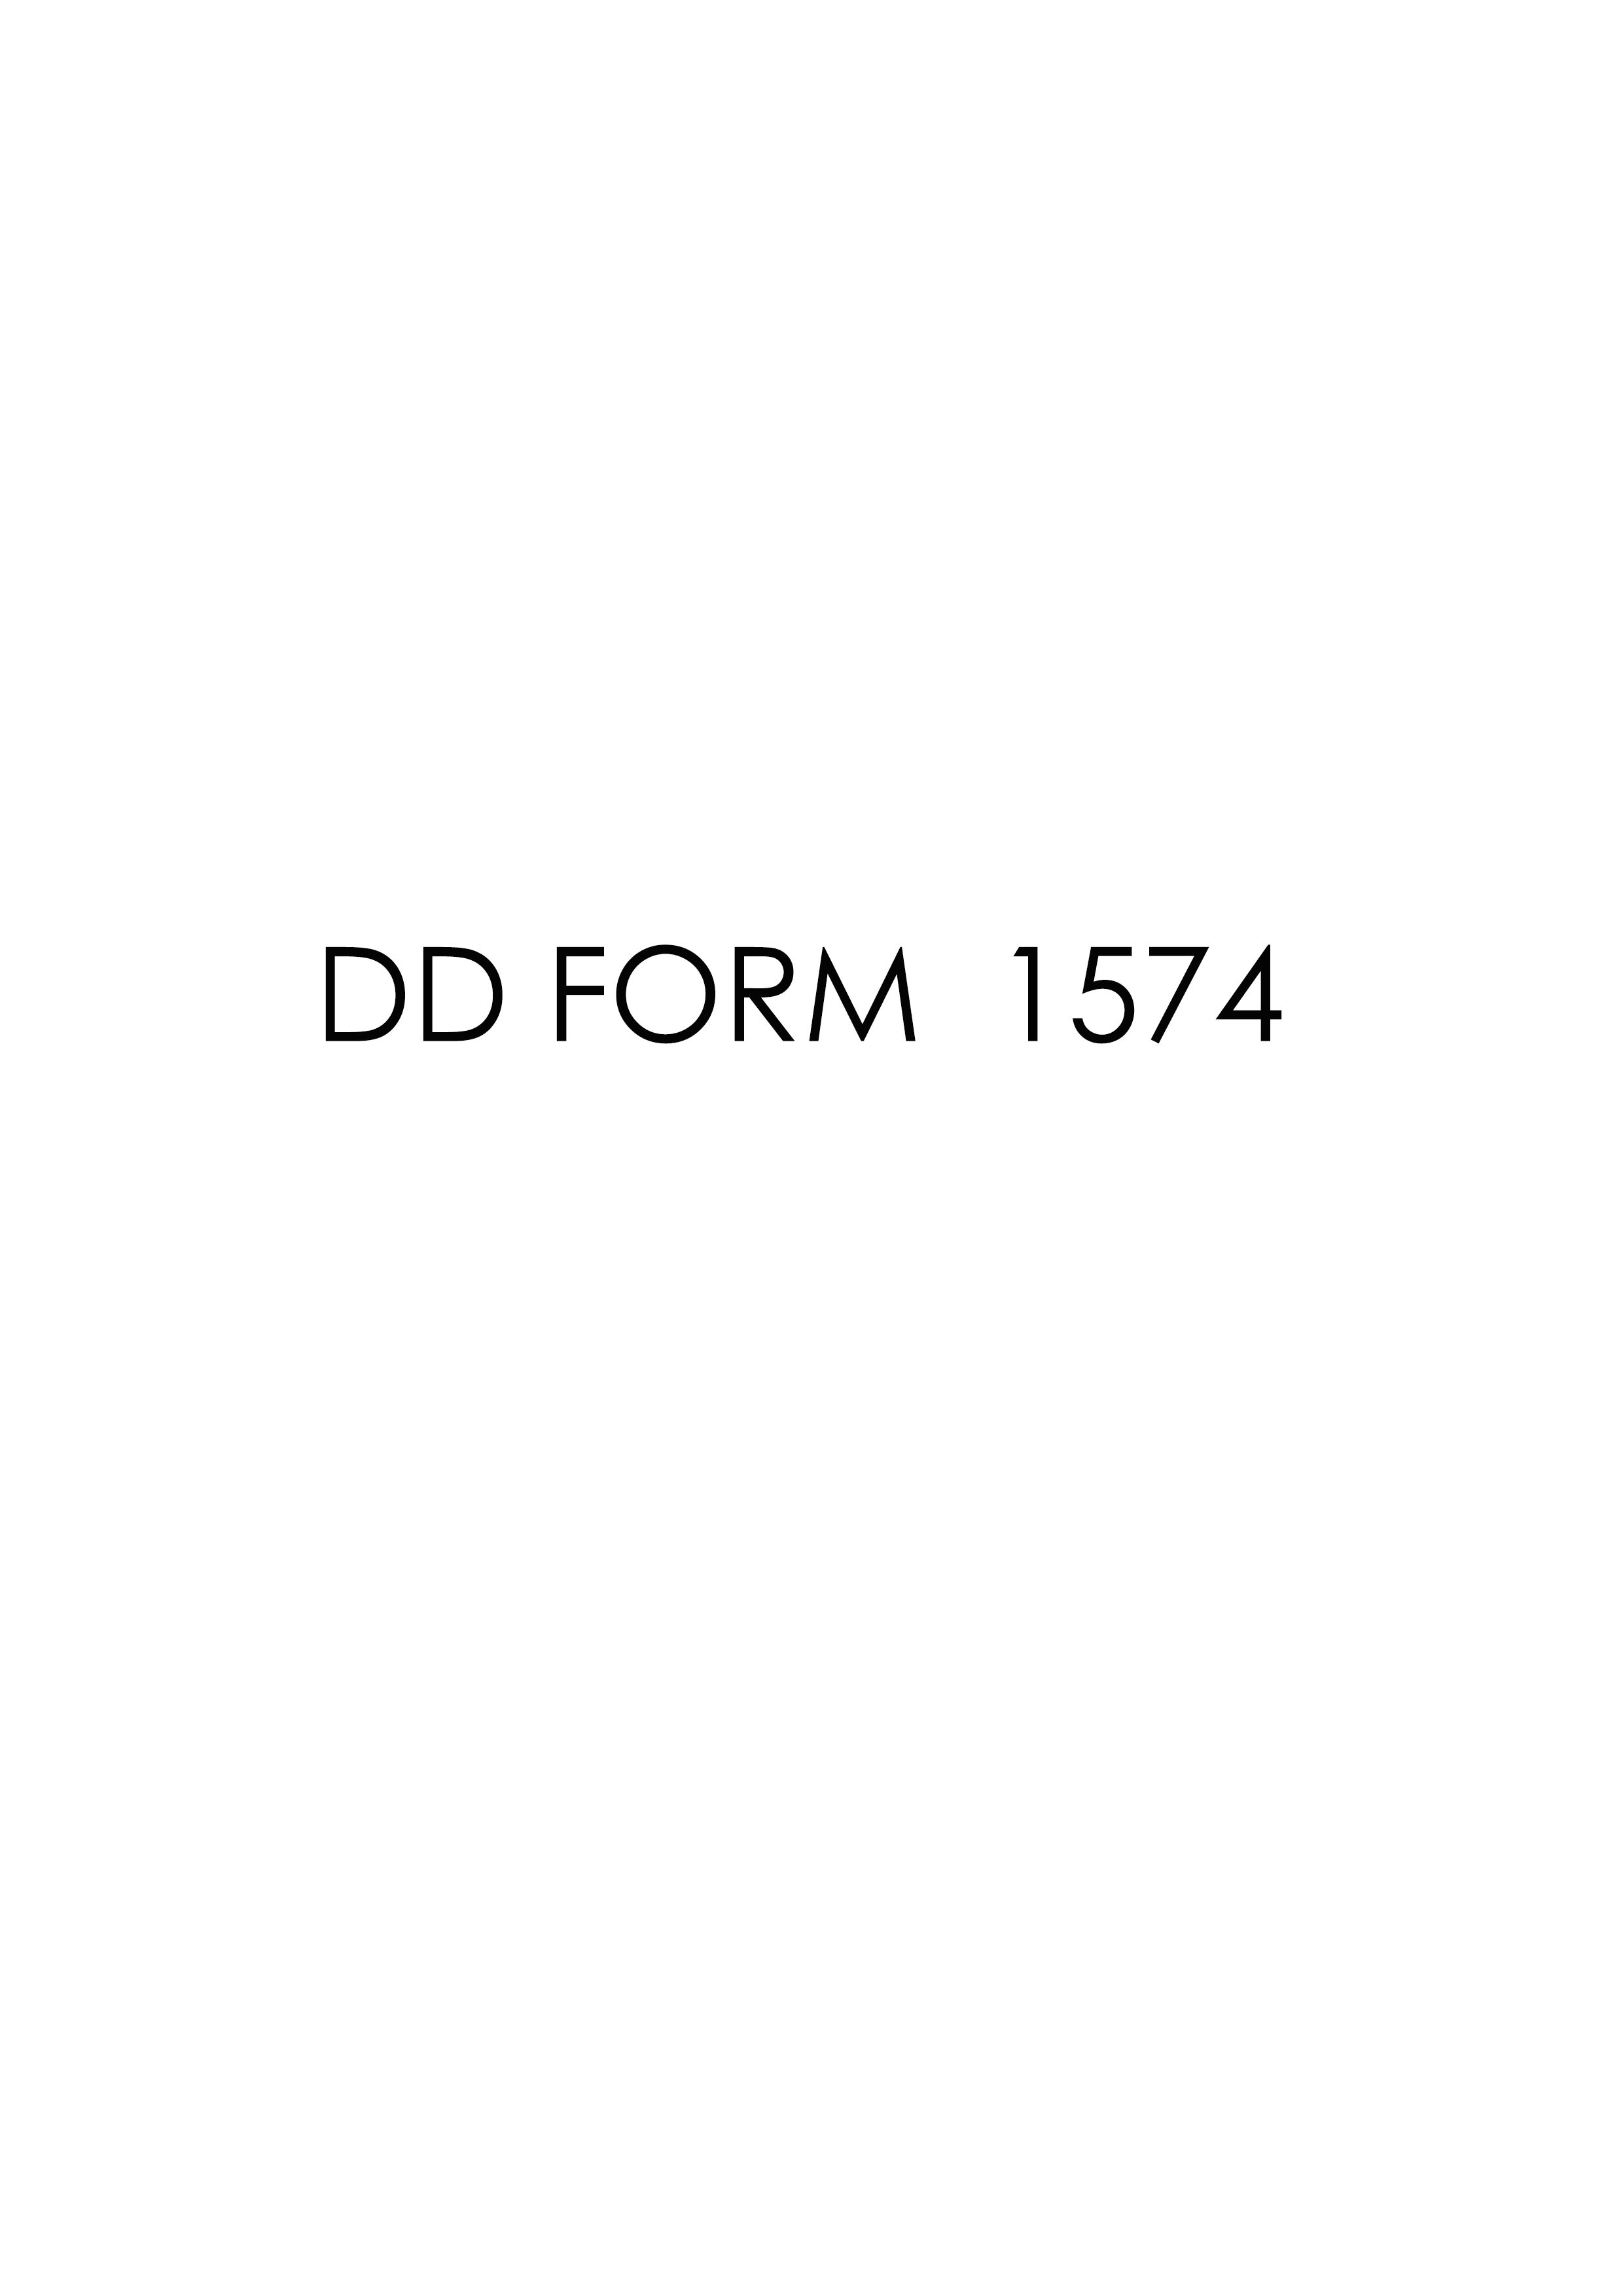 Download dd 1574 Form